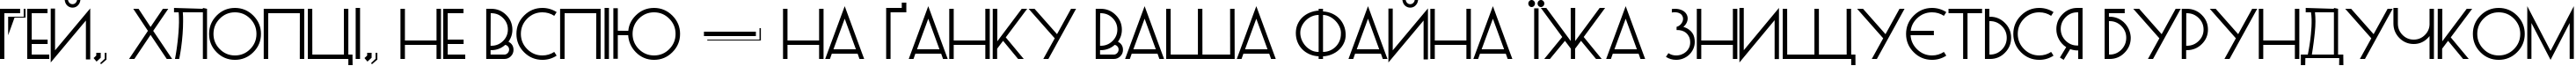 Пример написания шрифтом PosteRetro текста на украинском